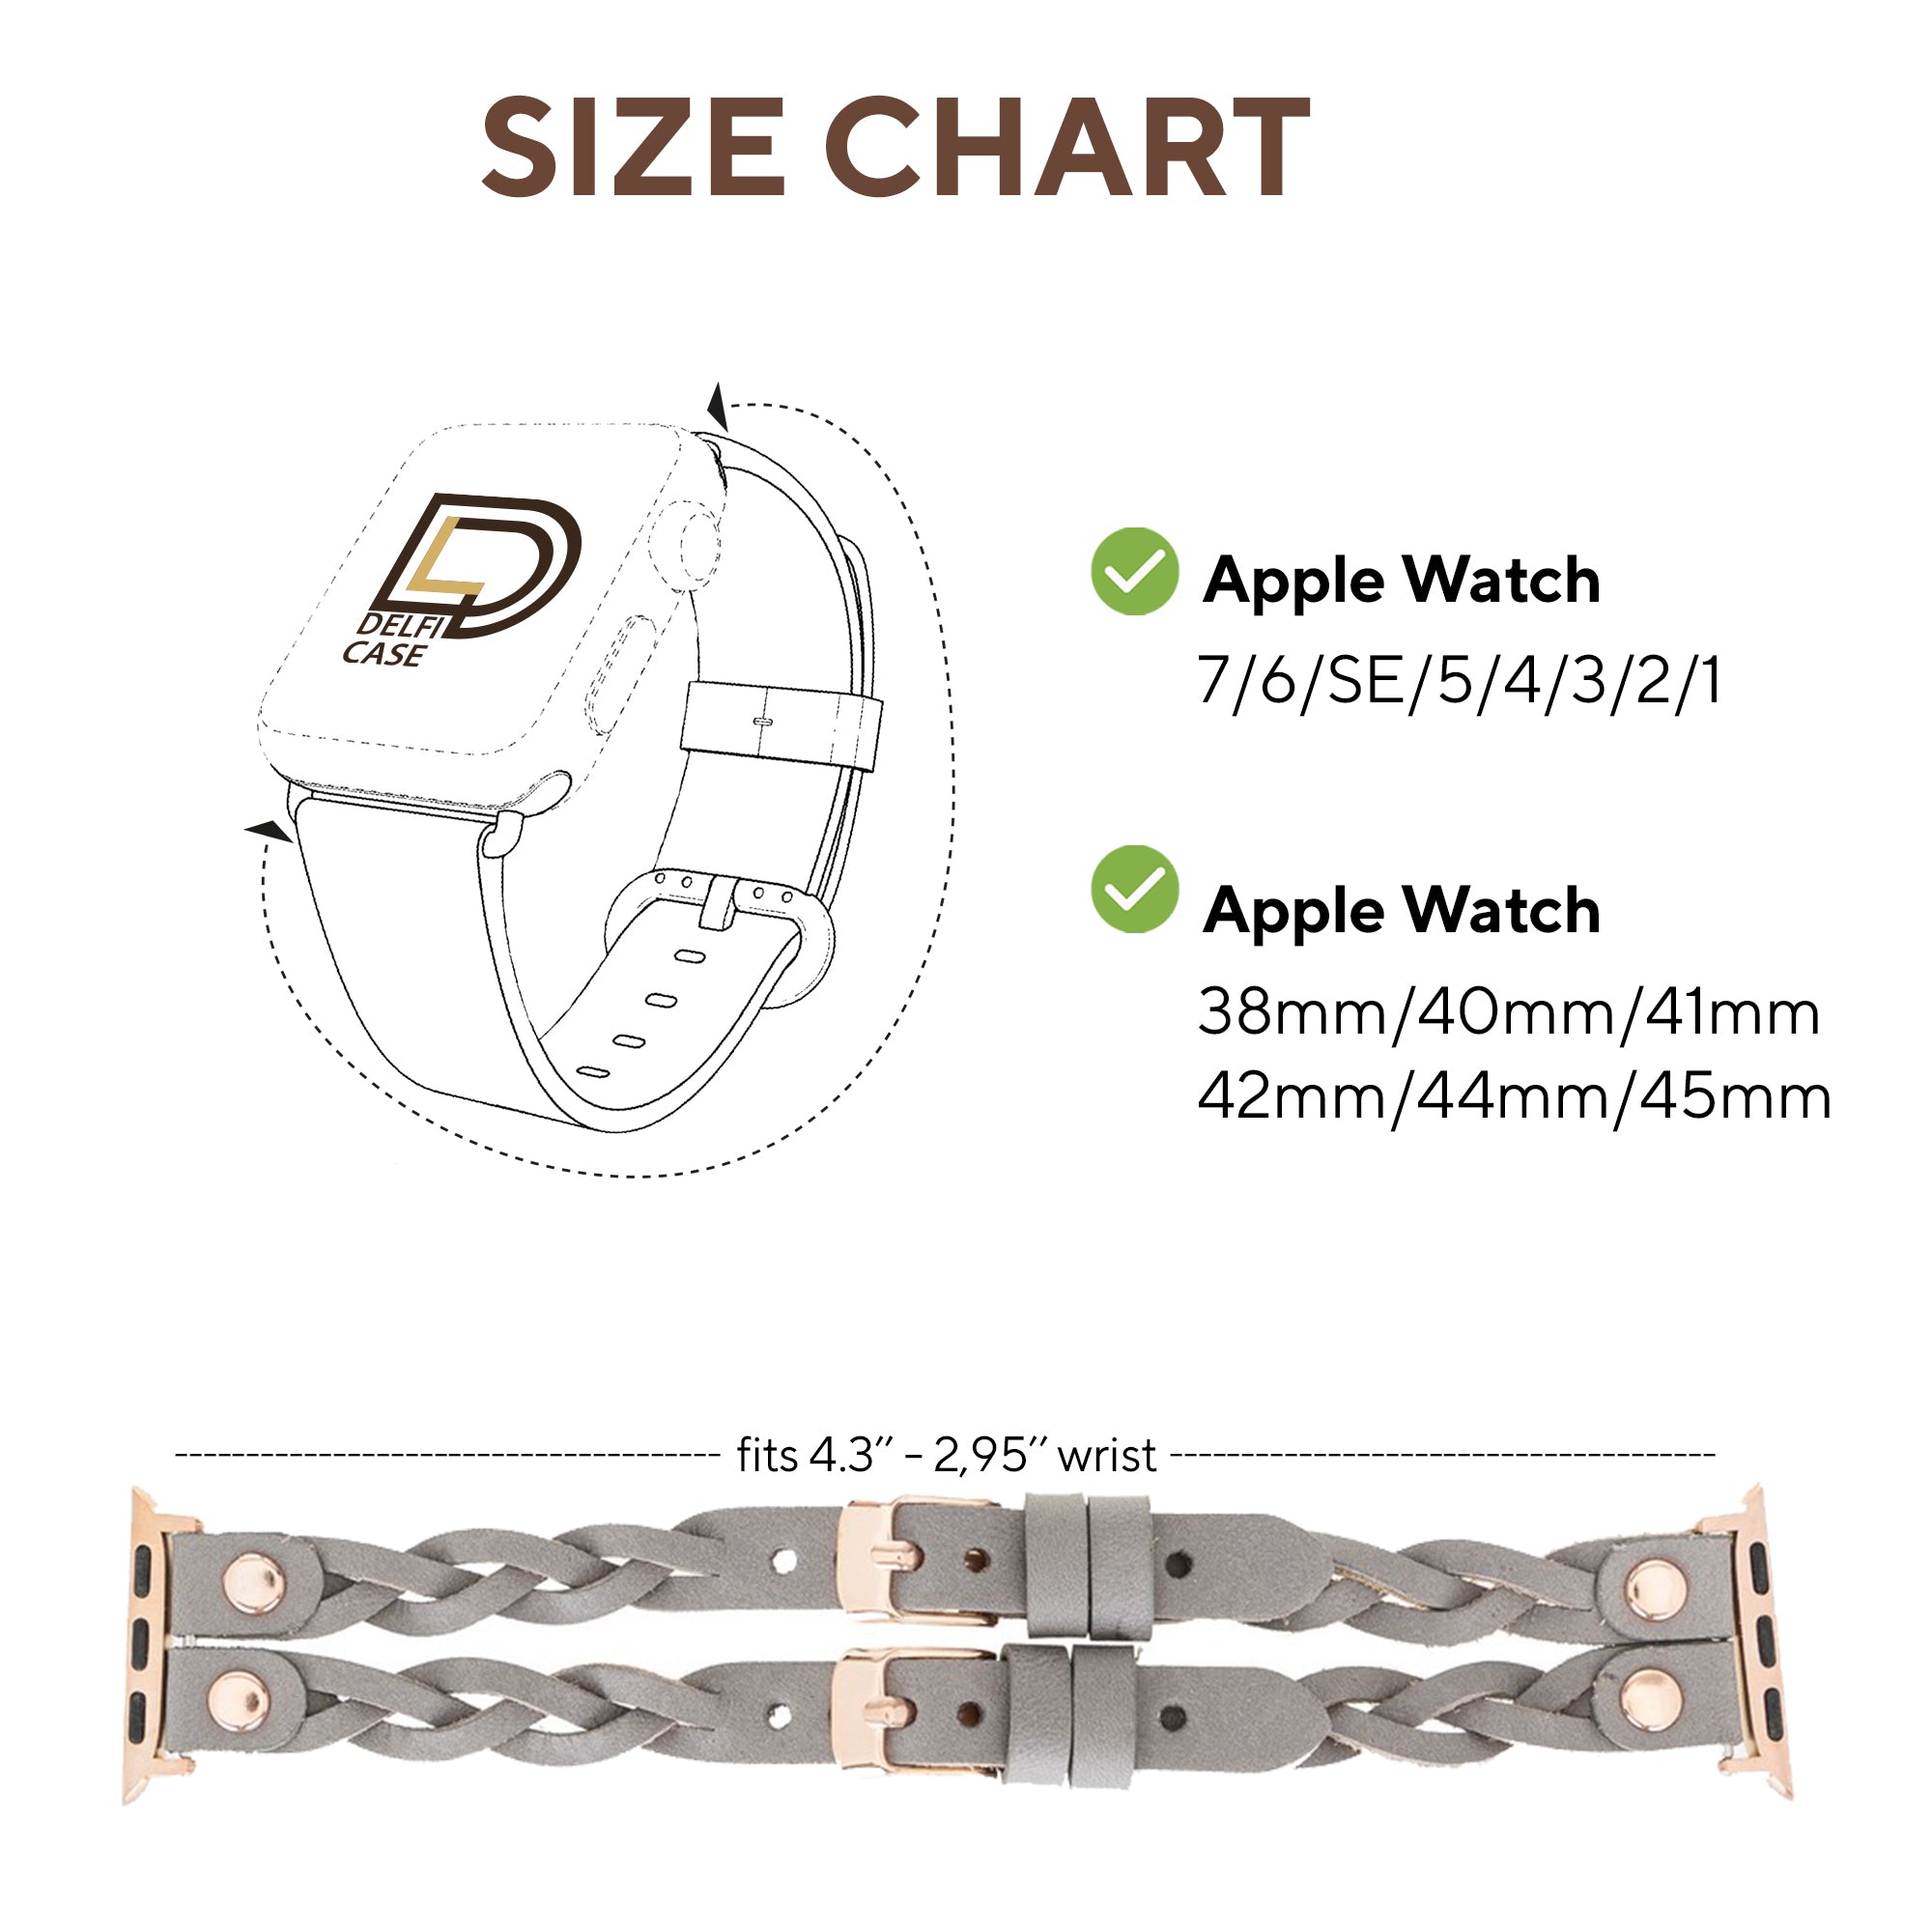 DelfiCase Sheffield-York Double Apple Watch Band for Apple Watch & Fitbit/Sense 45